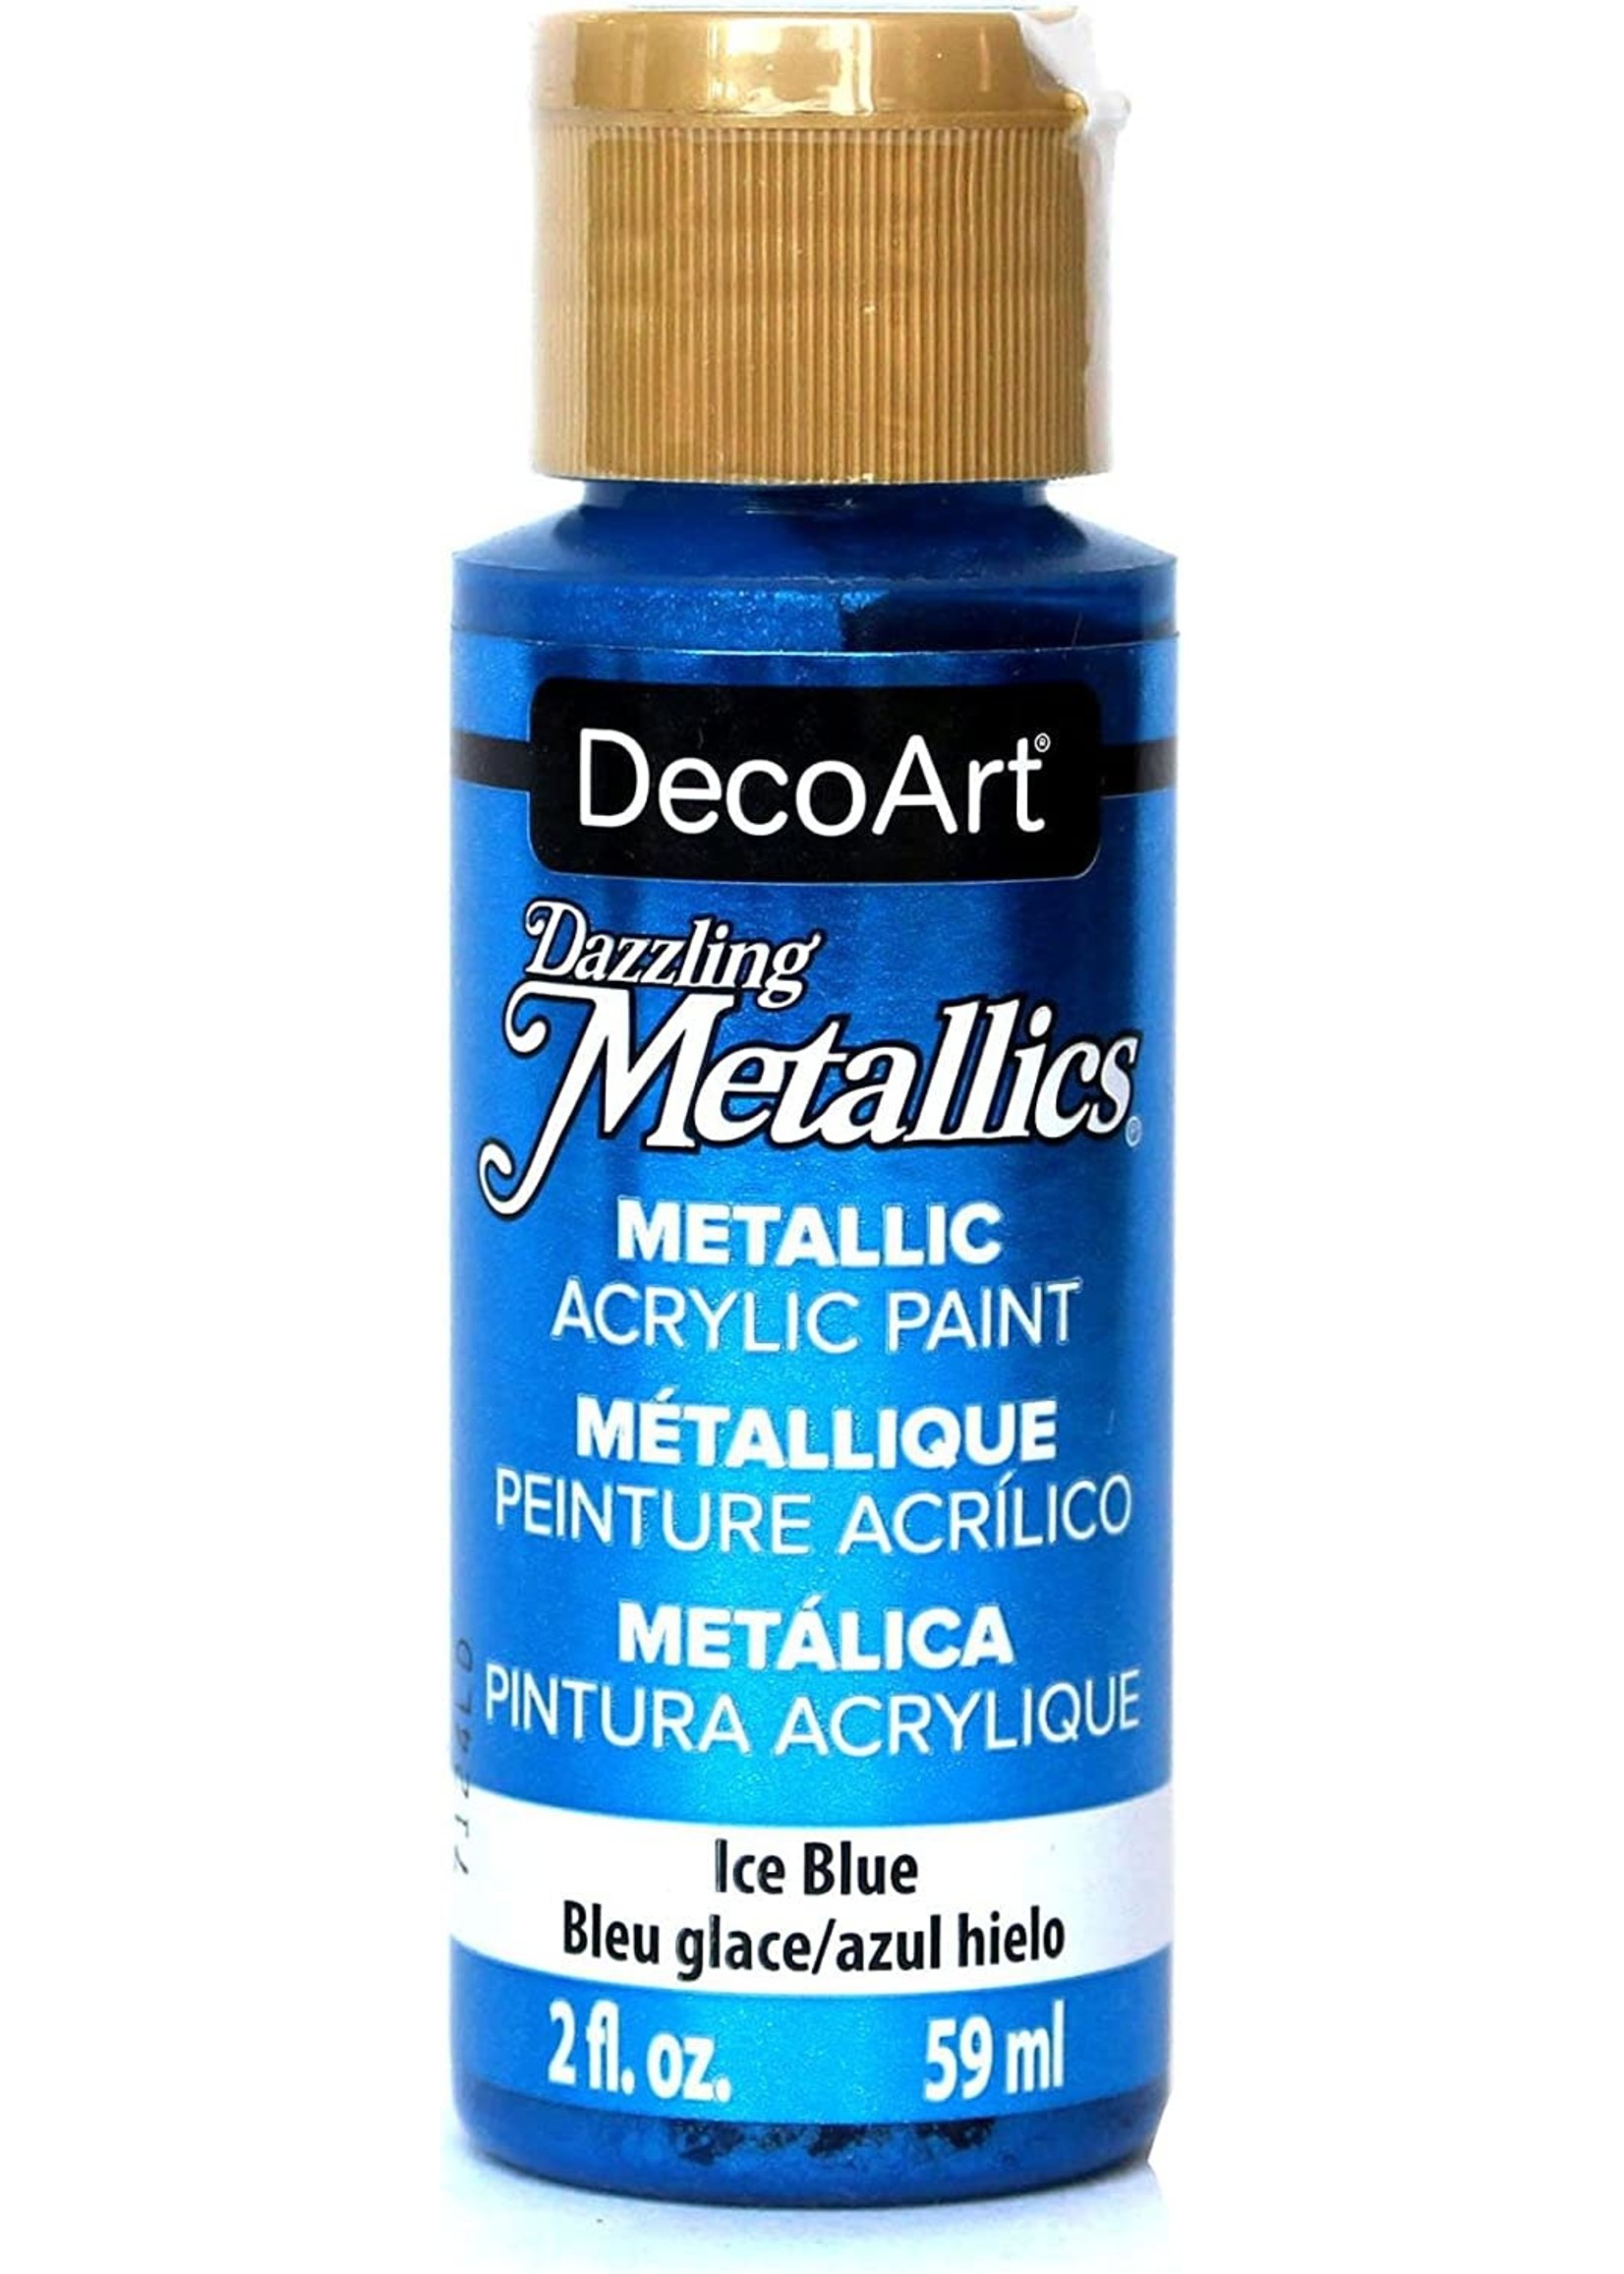 DecoArt Metallic Acrylic Paint, Ice Blue